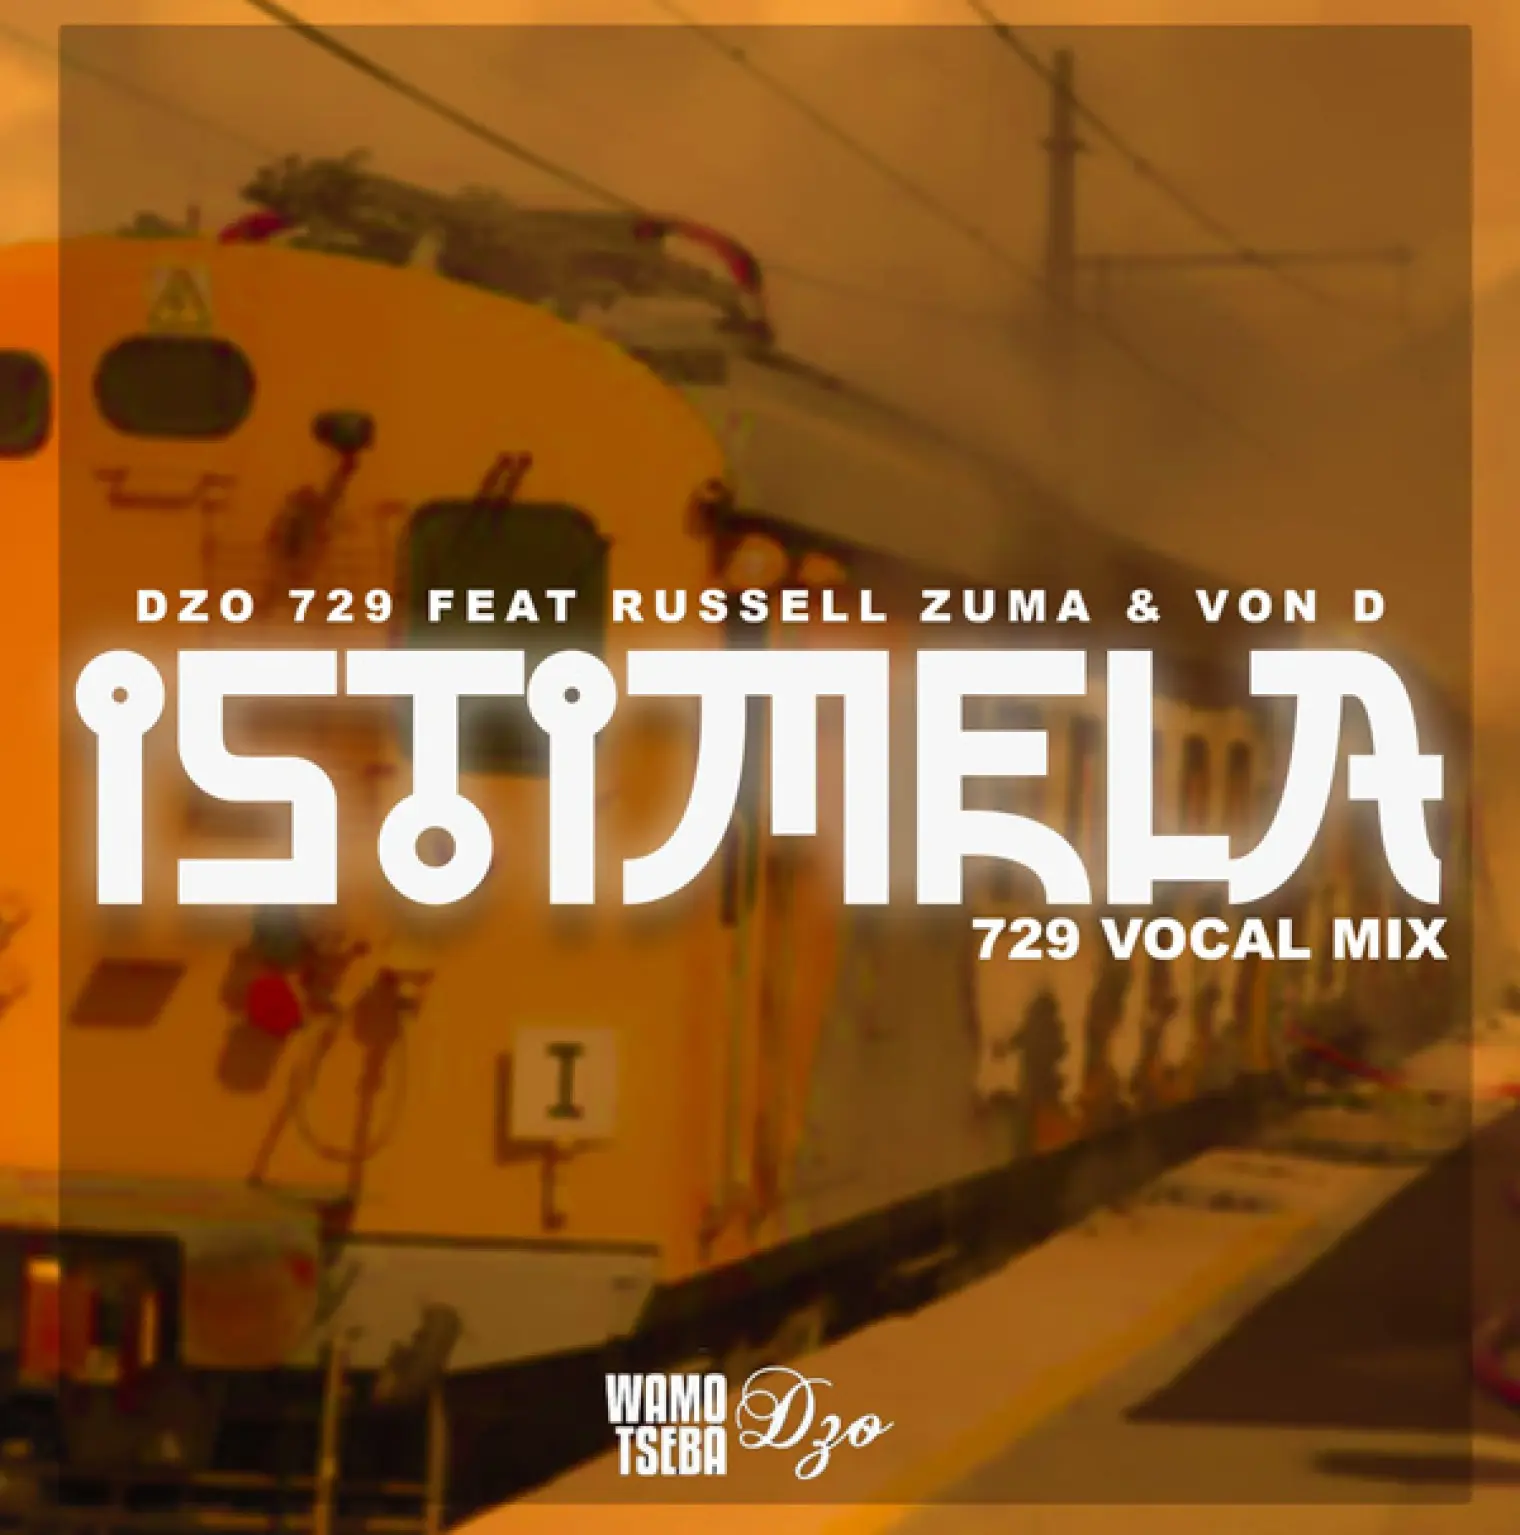 Istimela (feat. Russell Zuma & Von D) [729 Vocal Mix] -  Dzo 729 